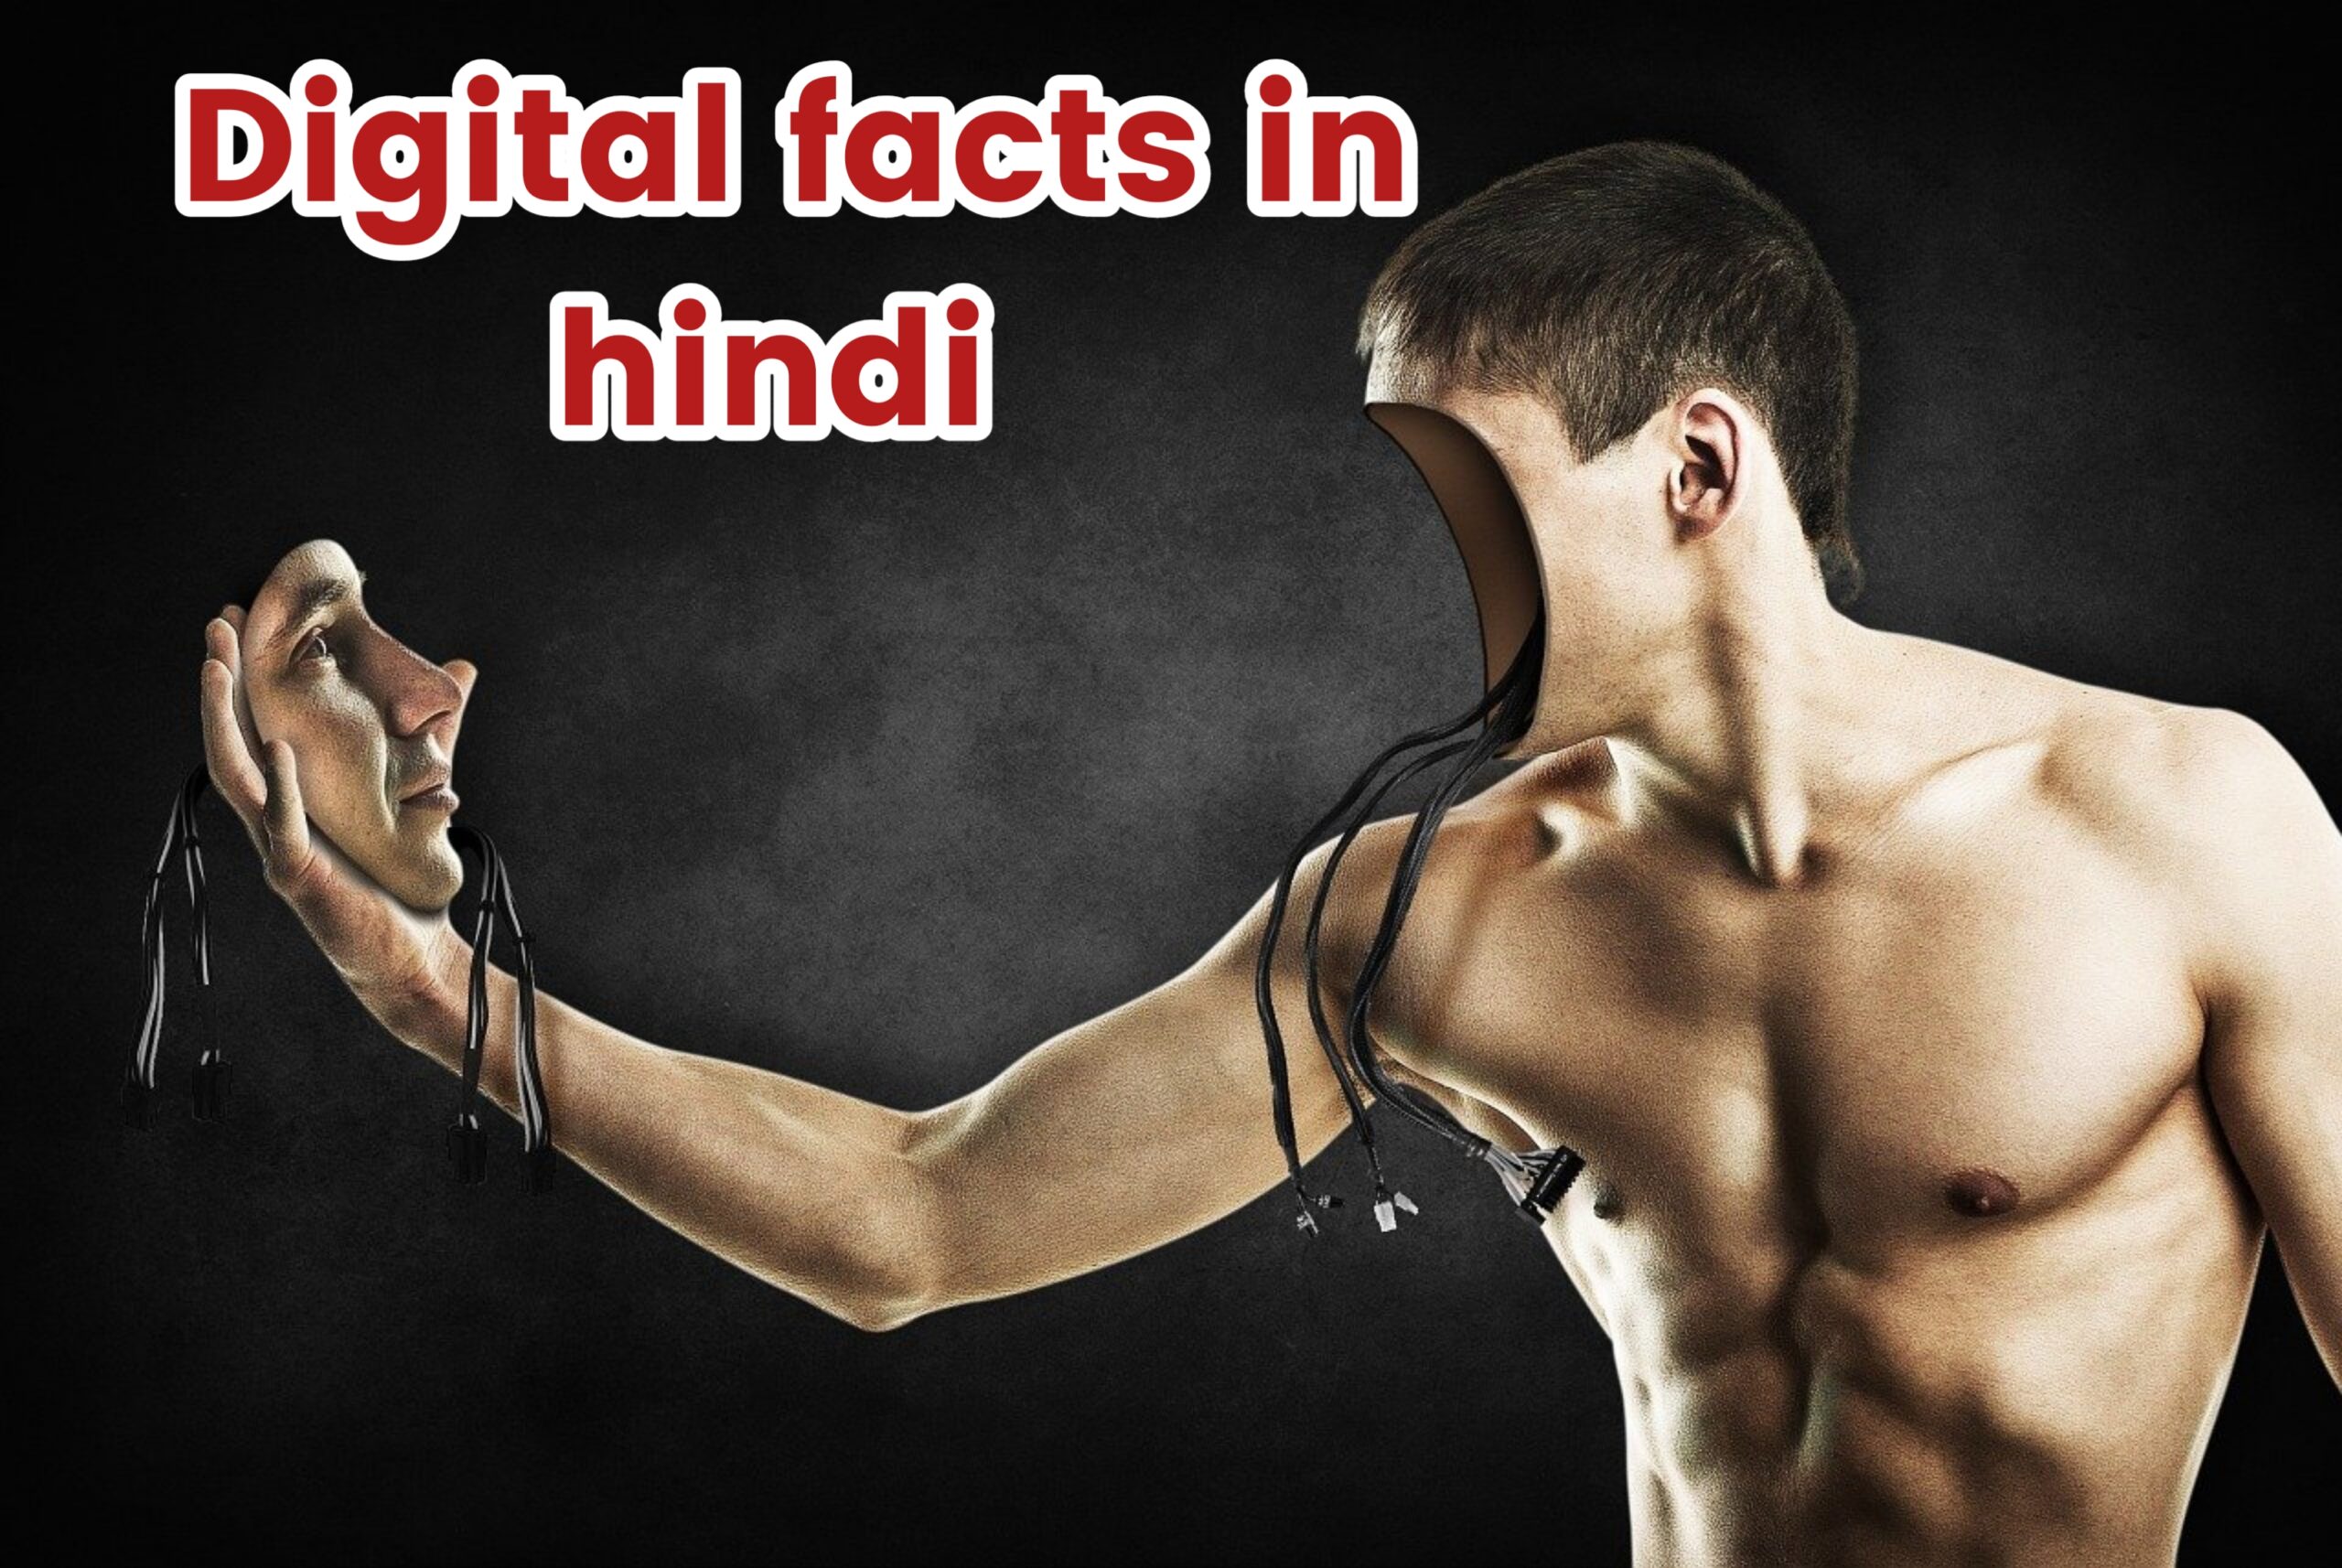 Digital facts in hindi